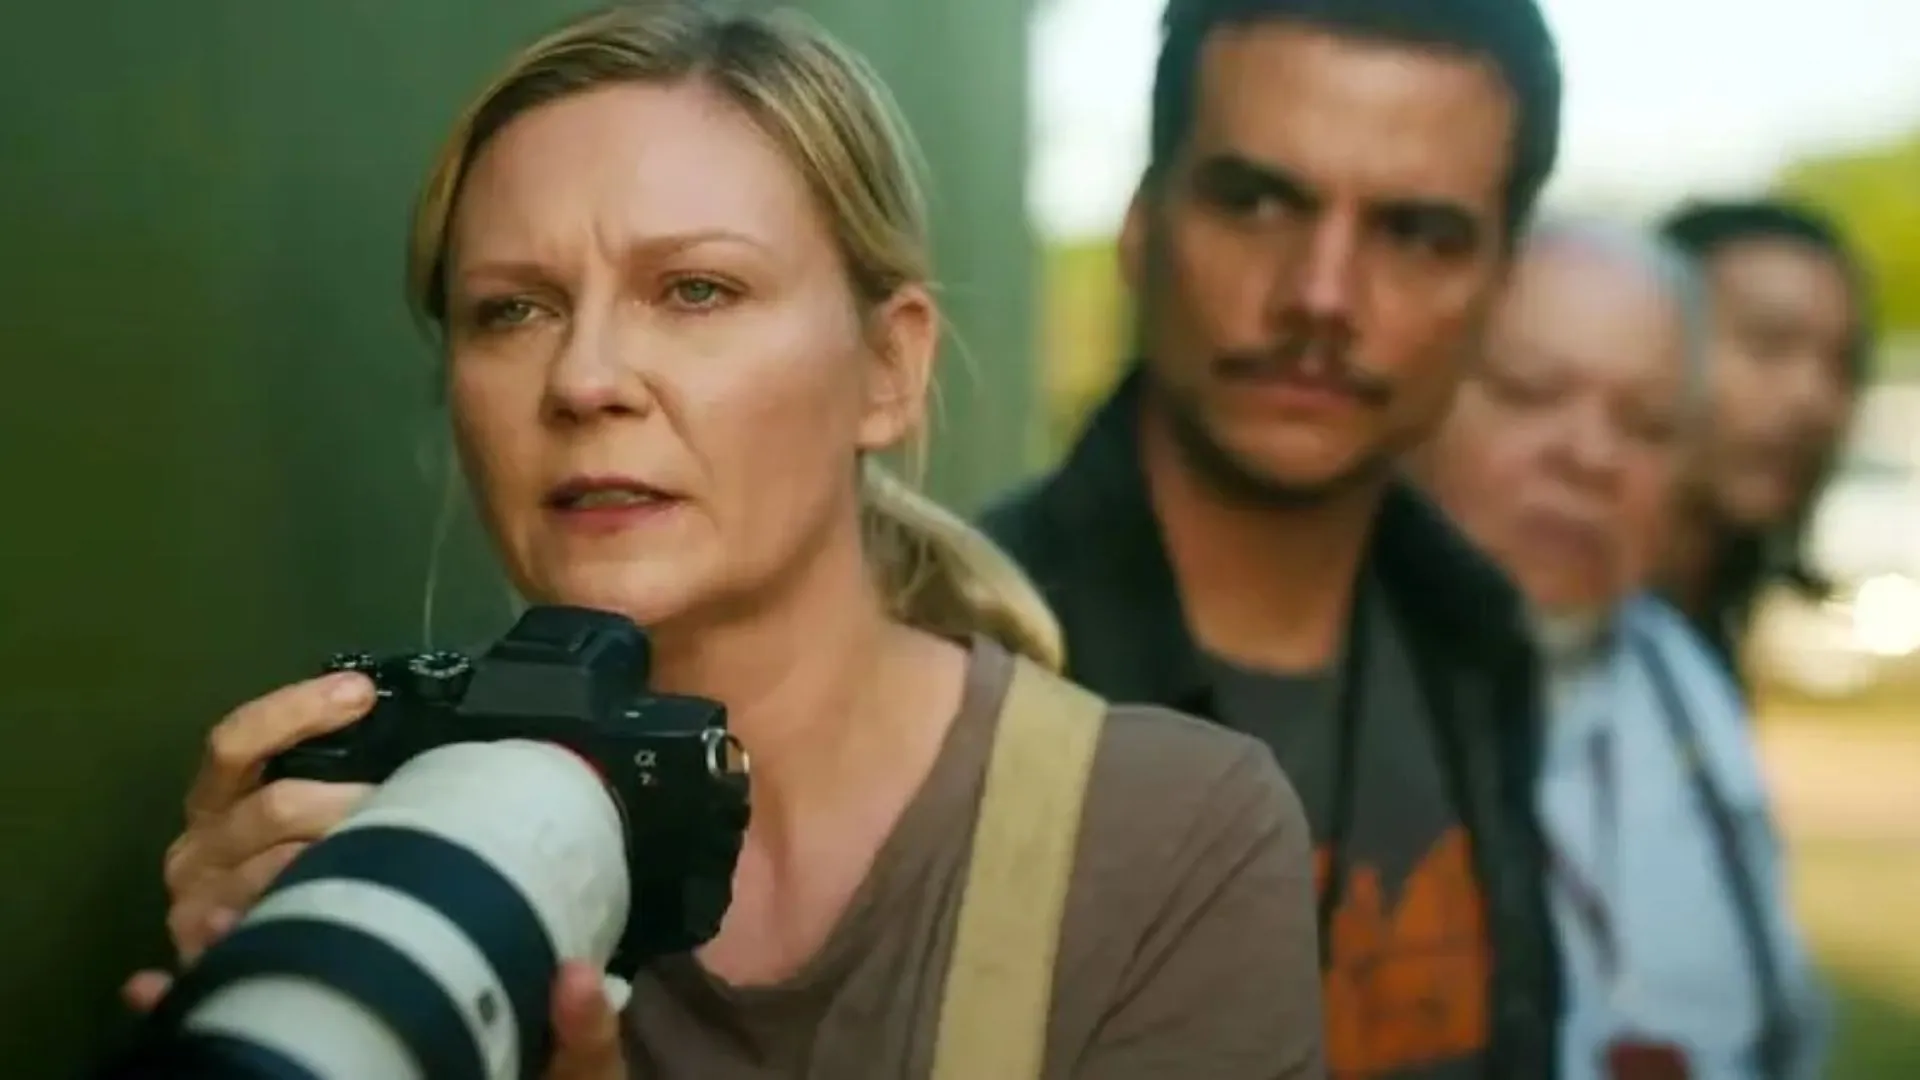 Kirsten Dunst Civil War Filming Triggers PTSD, Leaves Her Feeling Empty